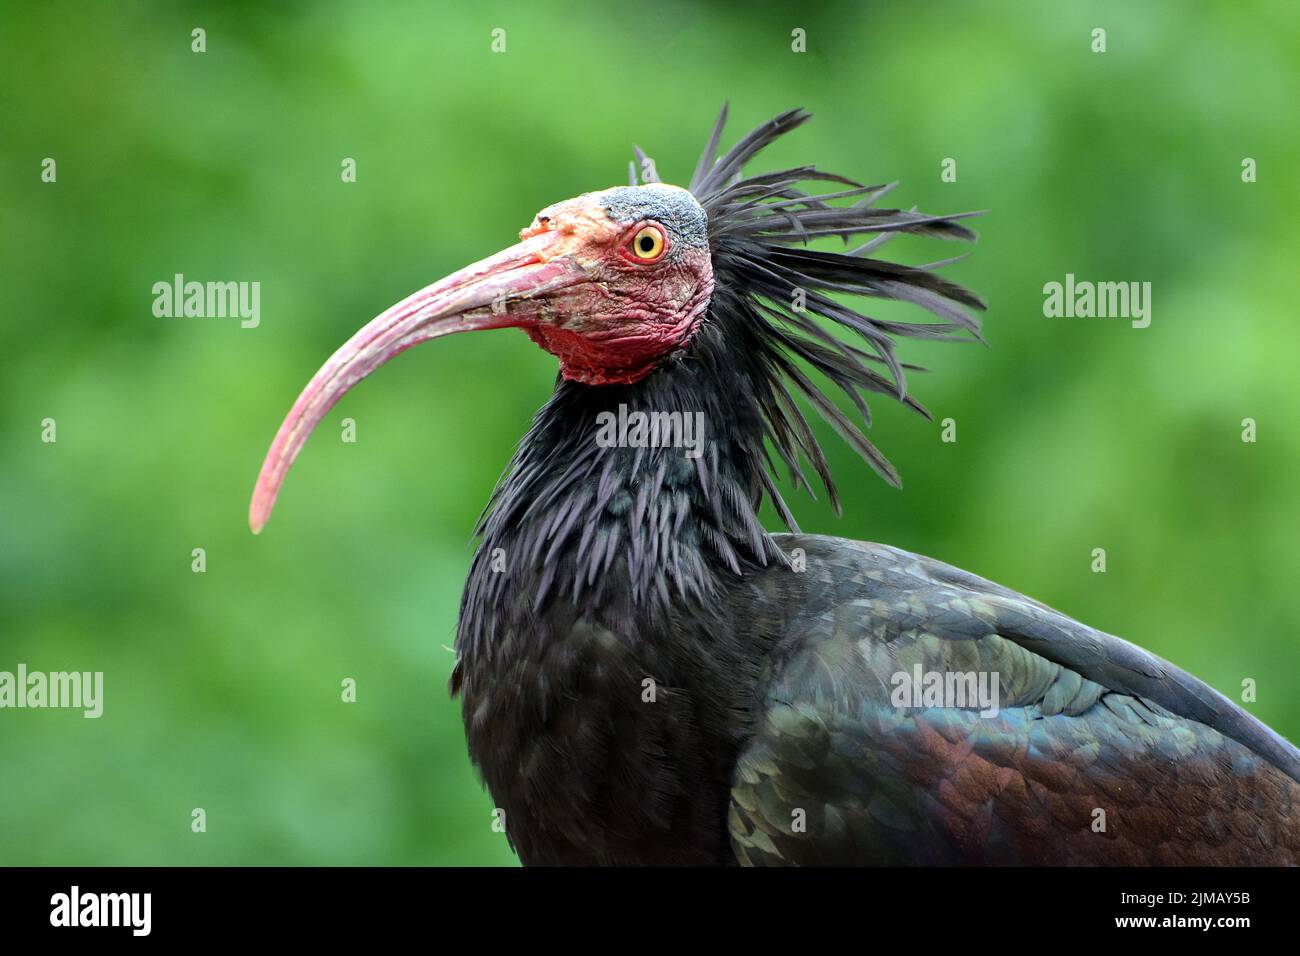 Northern bald ibis, hermit ibis, Waldrapp, Ibis chauve, Ibis érémite, Geronticus eremita, tarvarjú Stock Photo